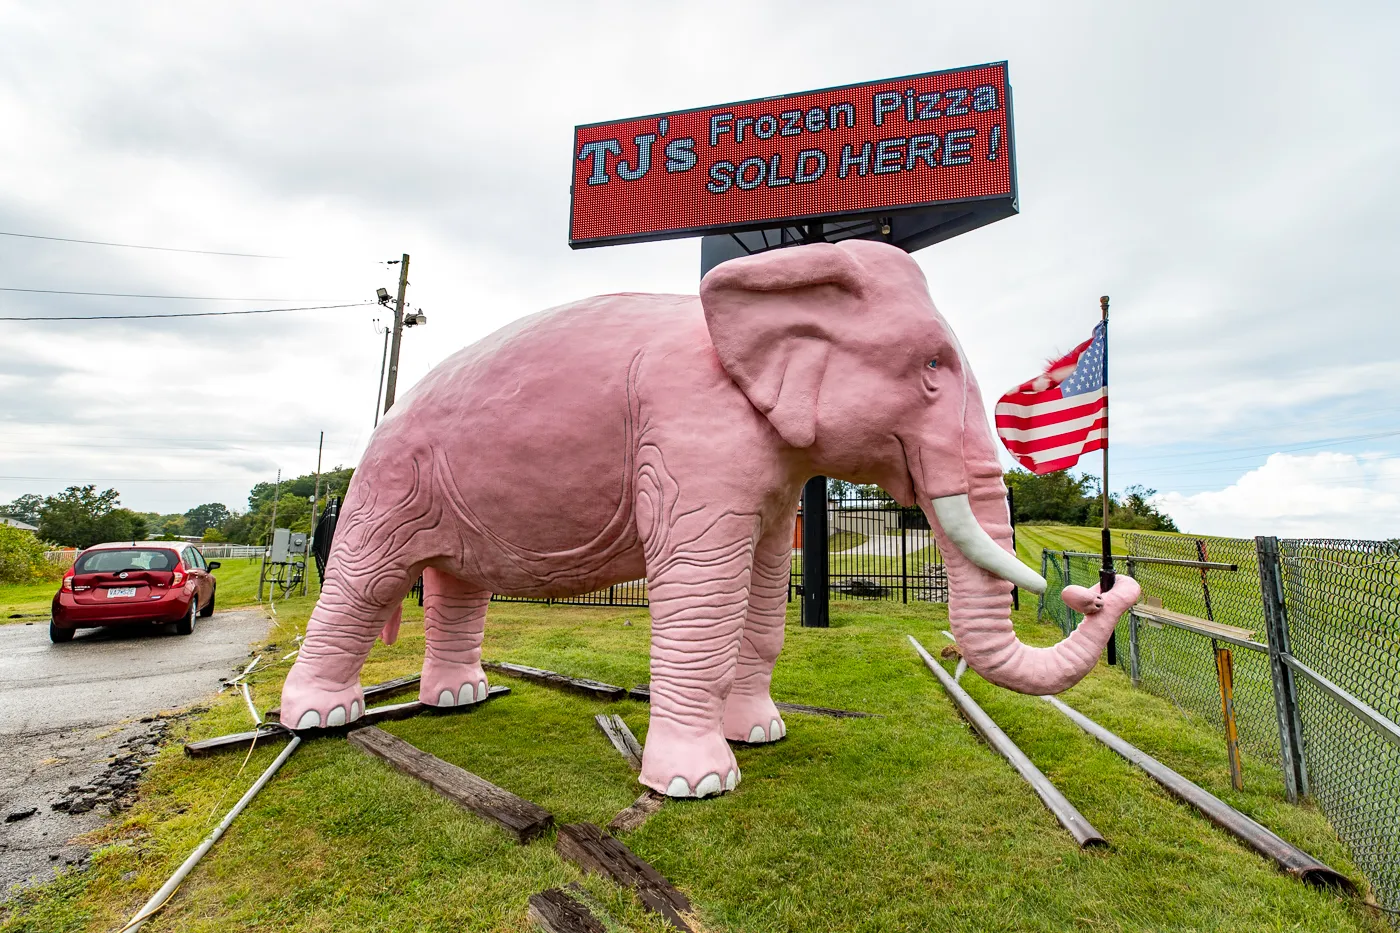 Large Pink Elephant in Fenton, Missouri roadside attraction